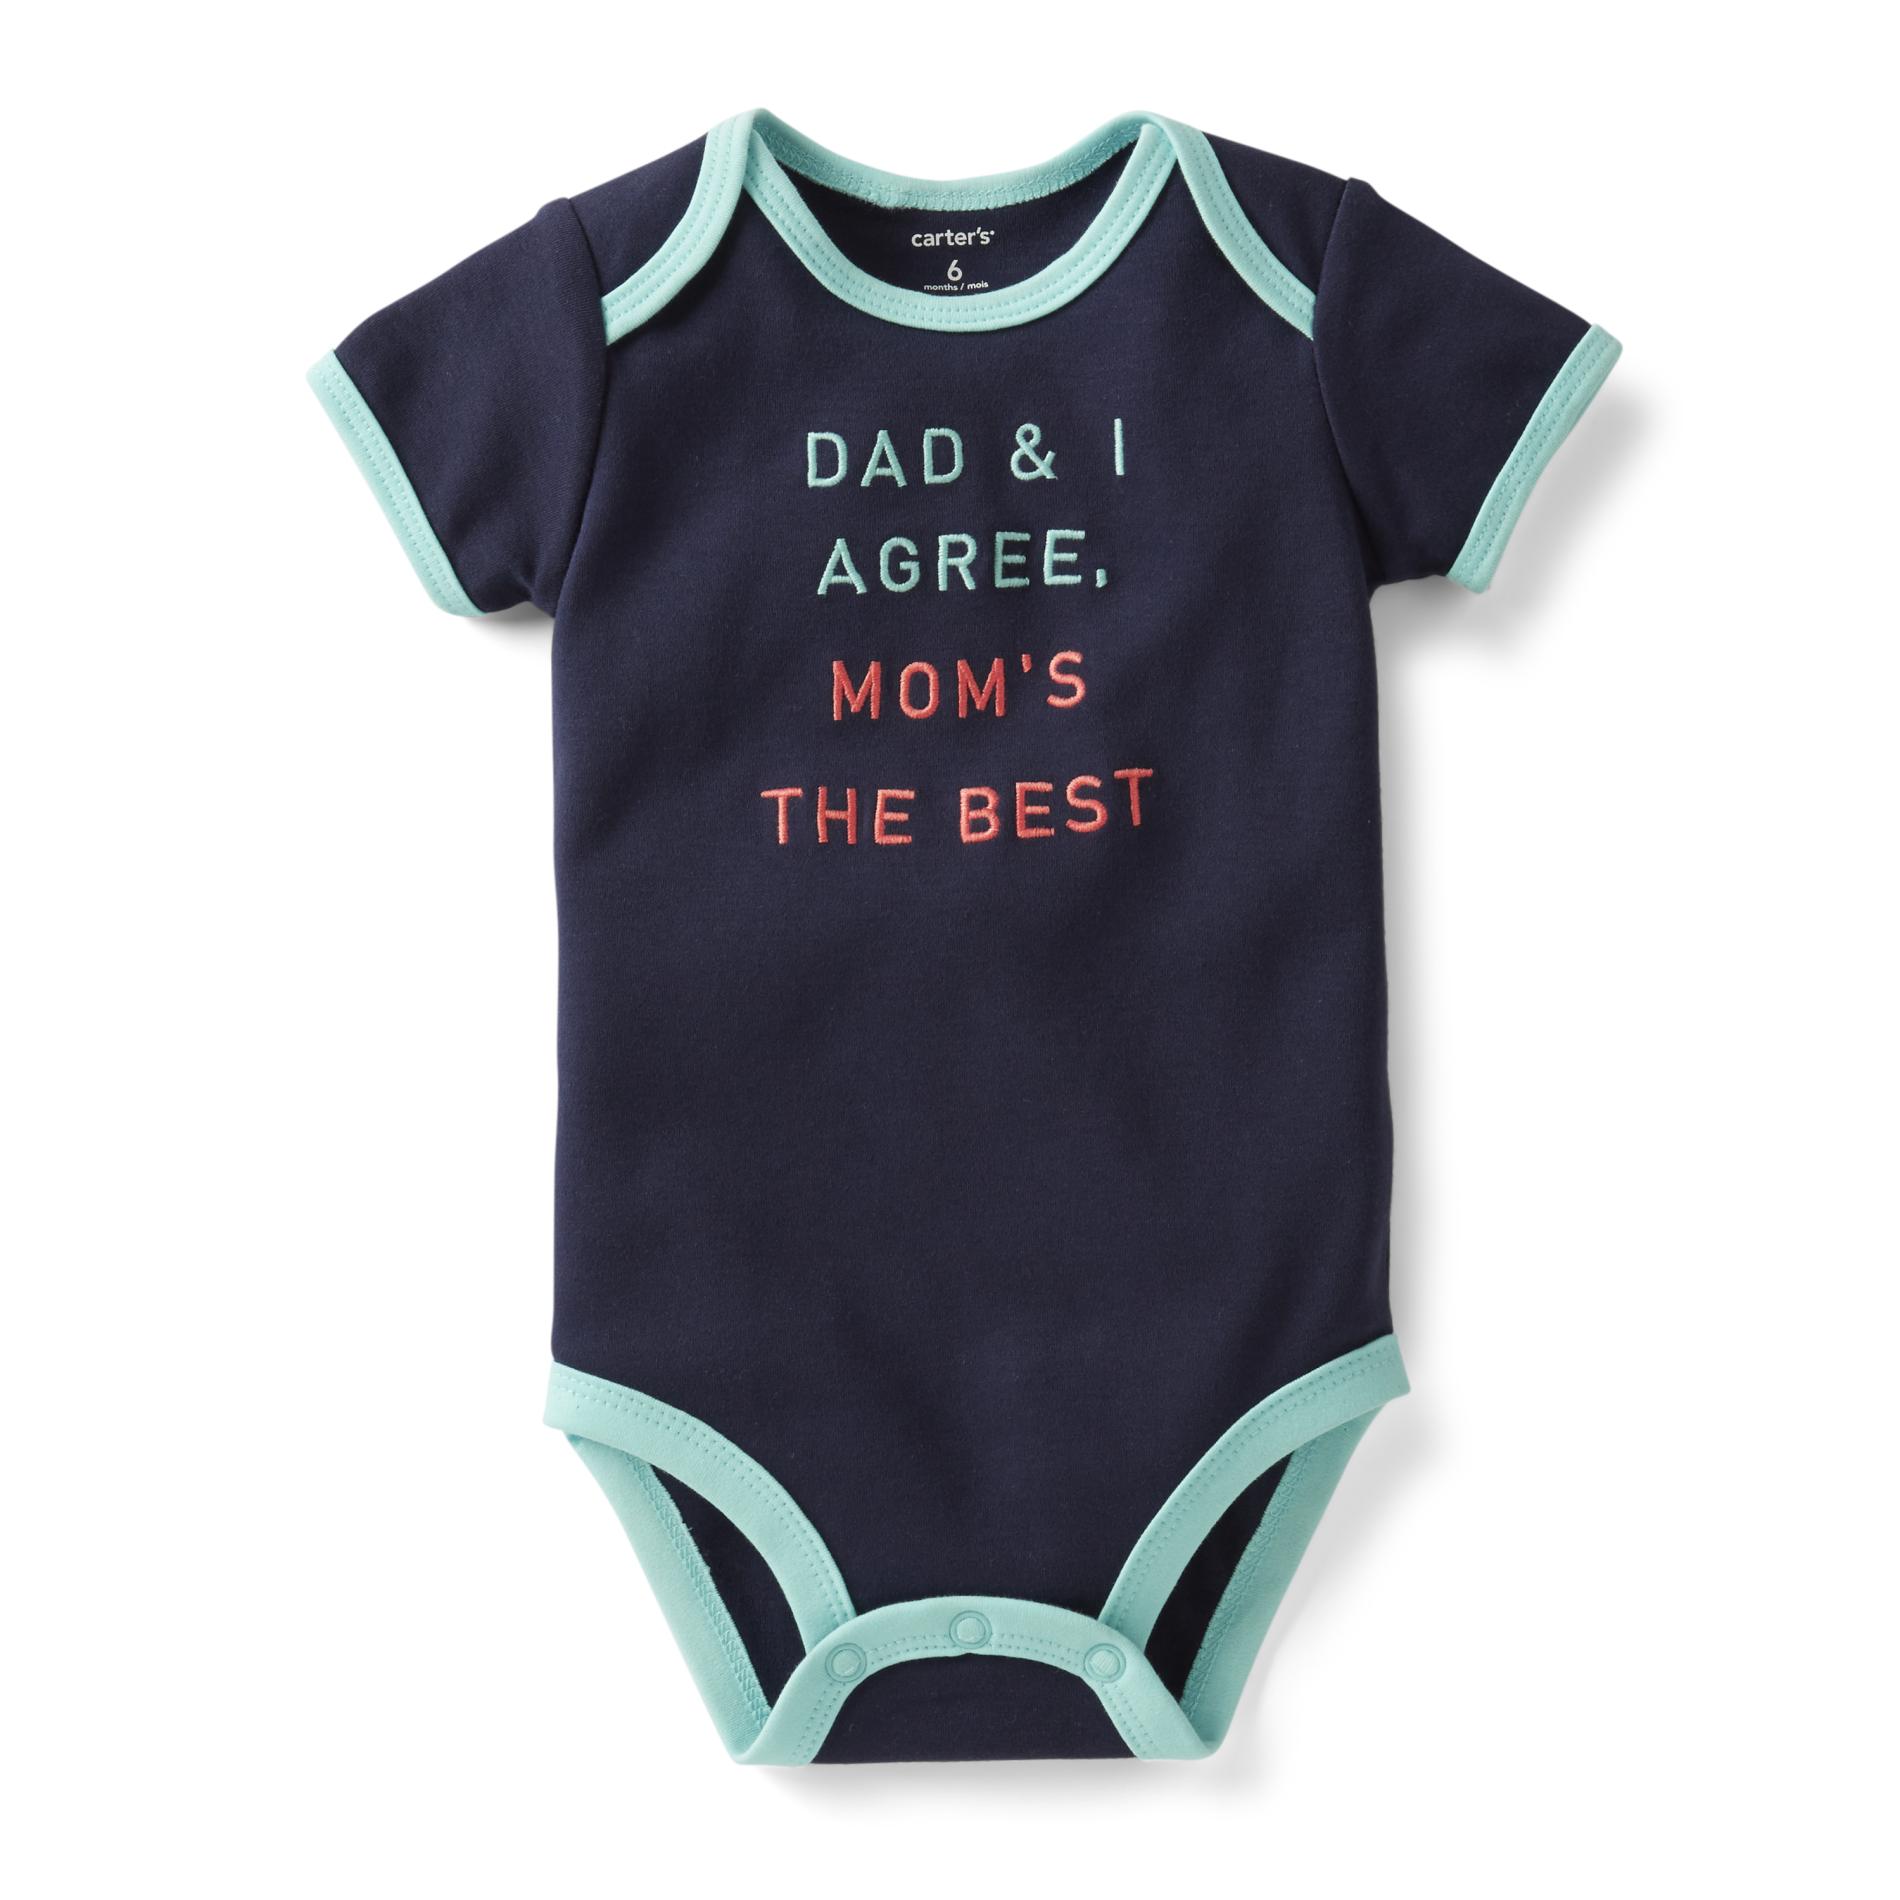 Carter's Infant Boy's Bodysuit - Mom's The Best